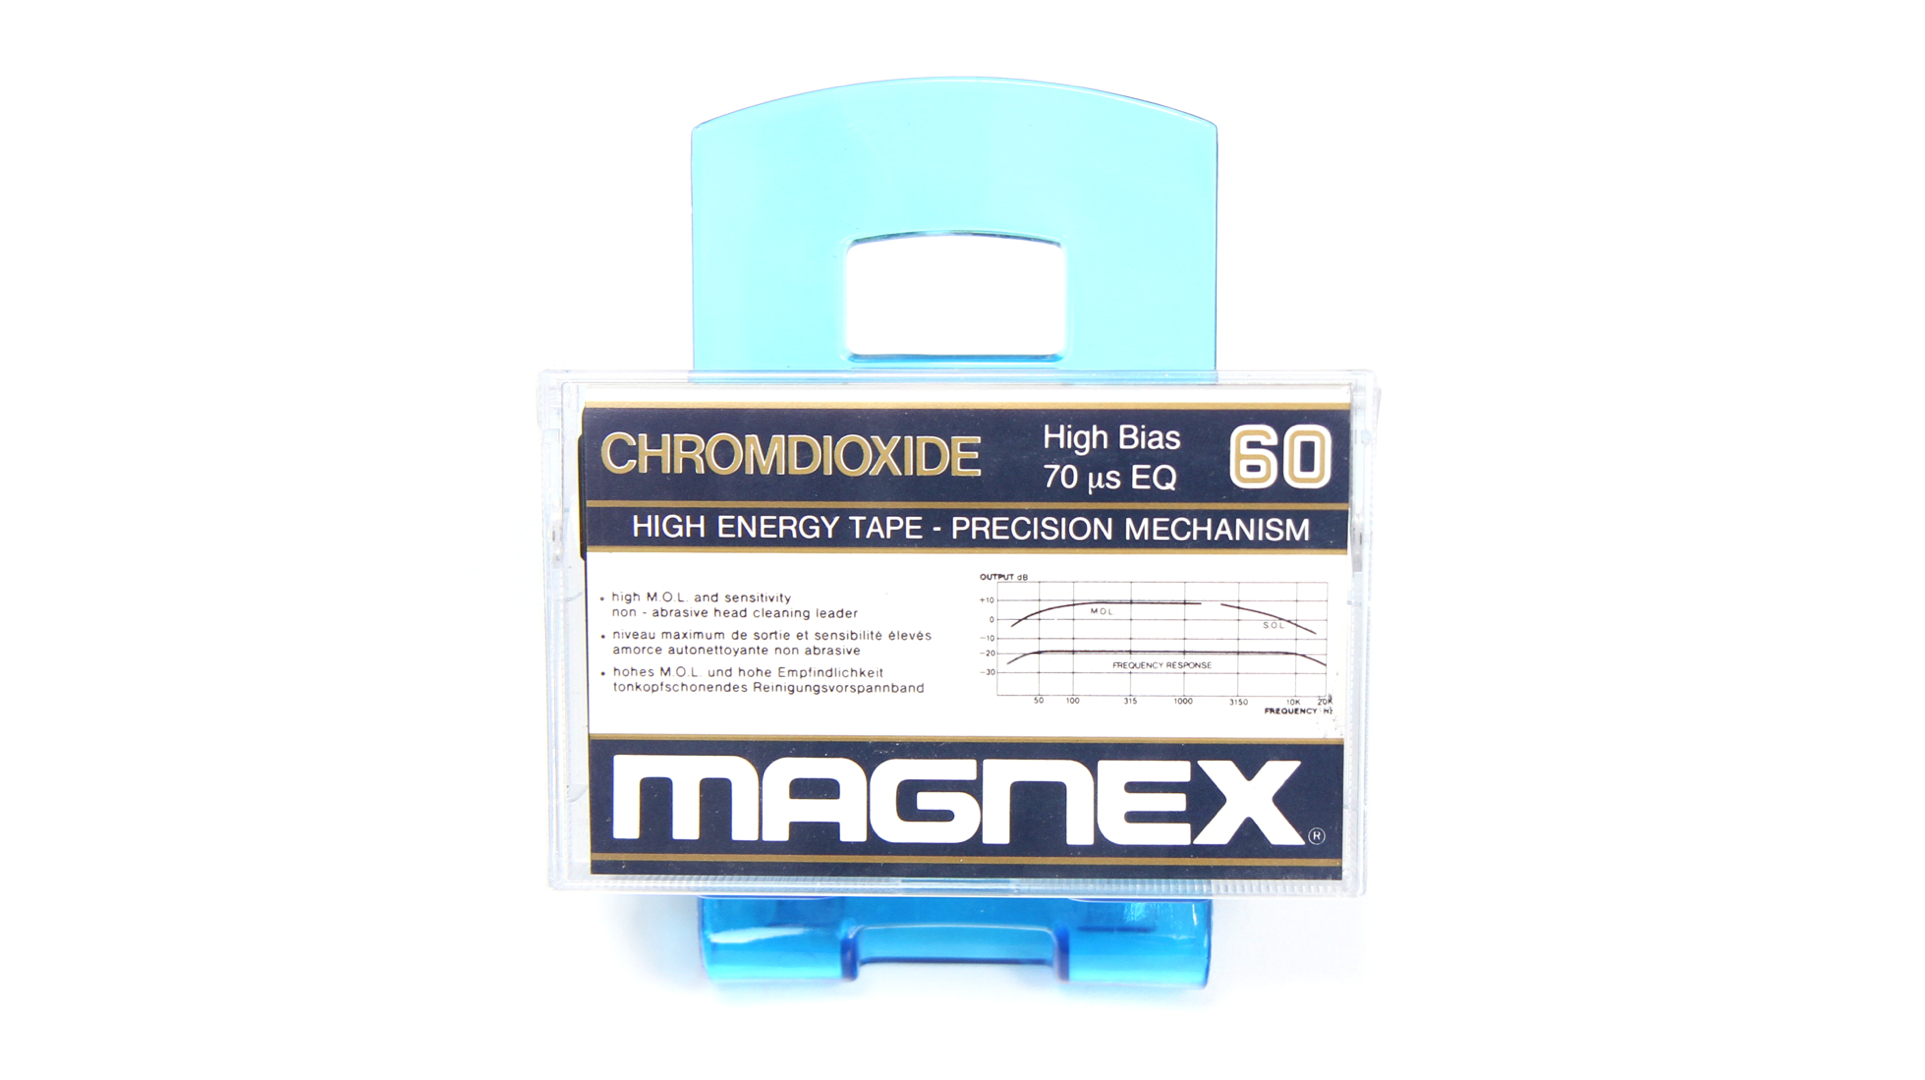 MAGNEX 60 Chromdioxide